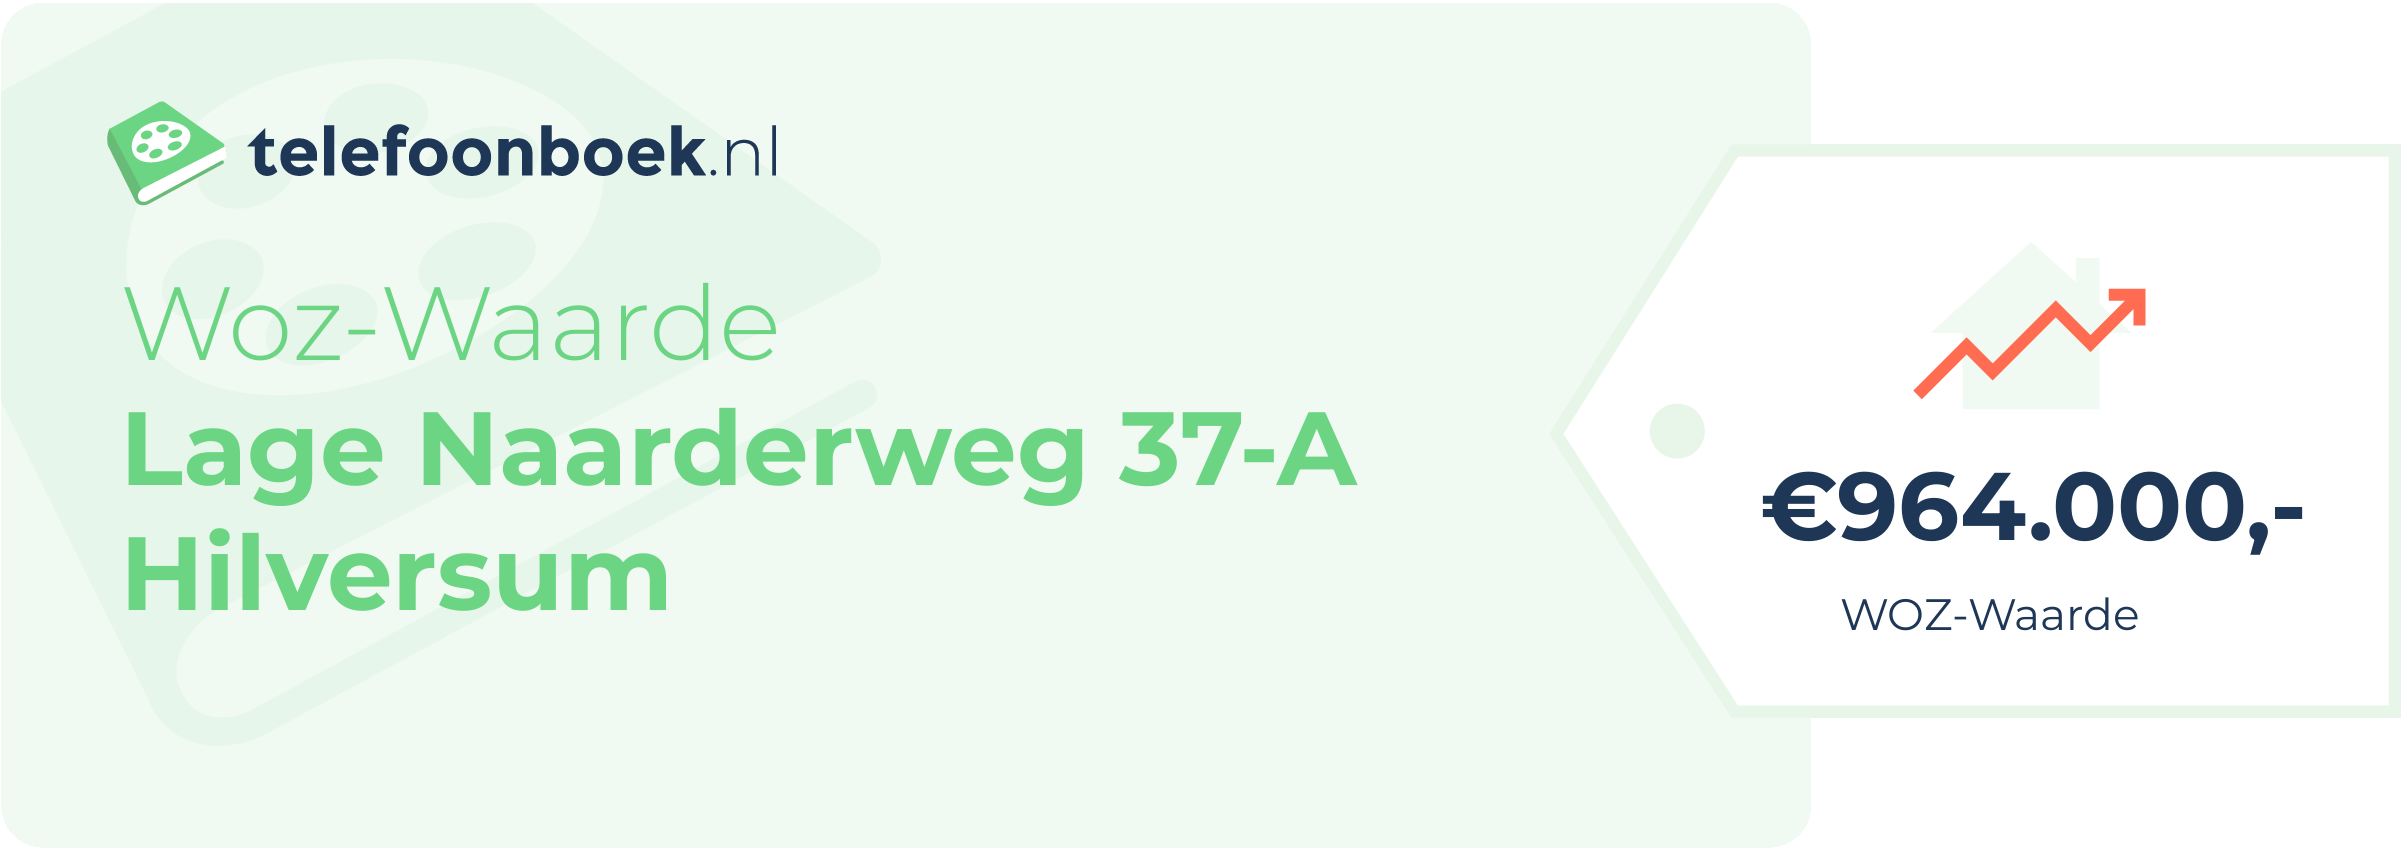 WOZ-waarde Lage Naarderweg 37-A Hilversum